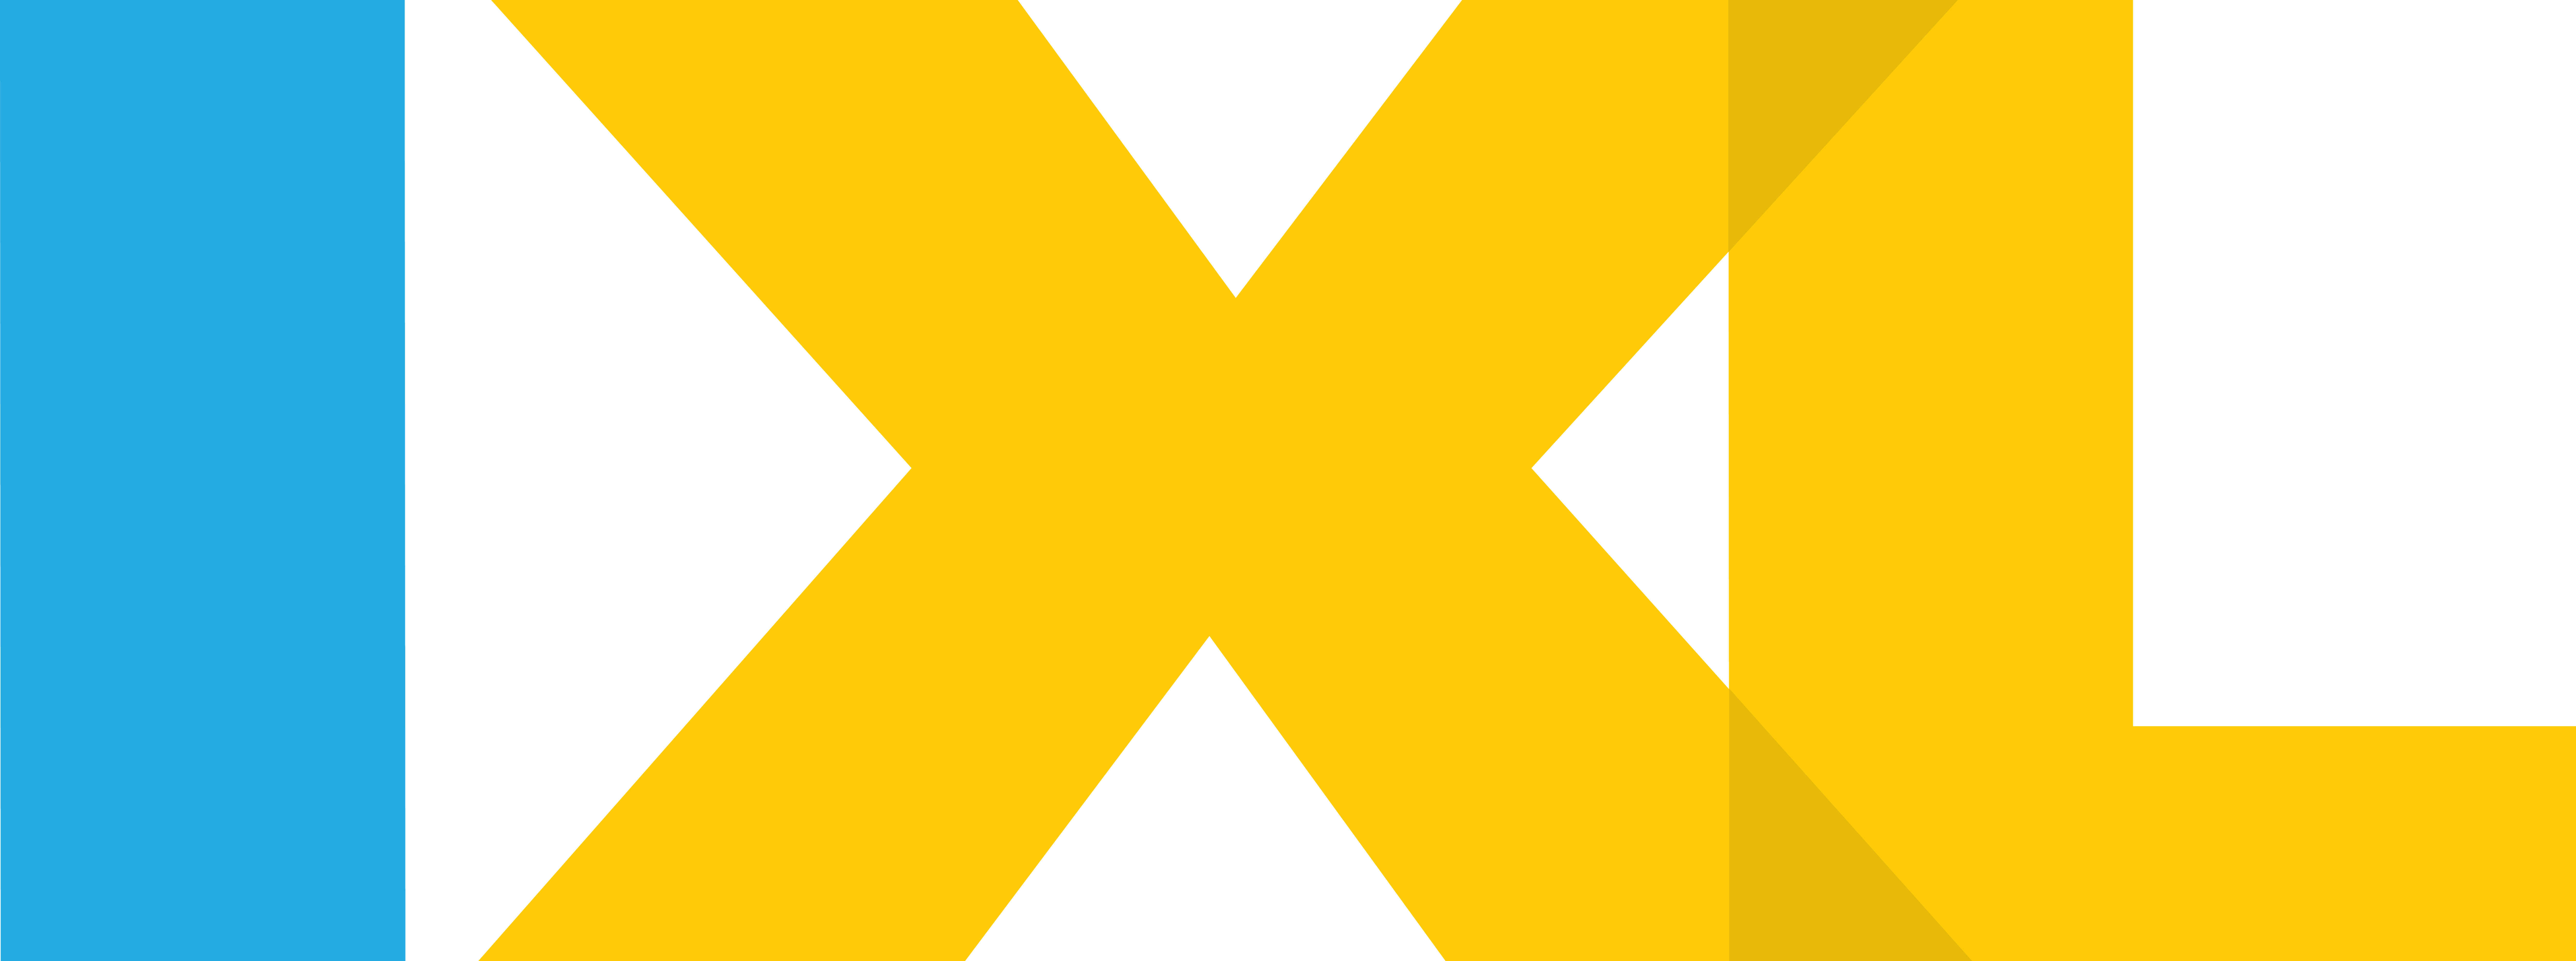 IXL Logo - IXL Learning | Certified App Developer of Educational App Store